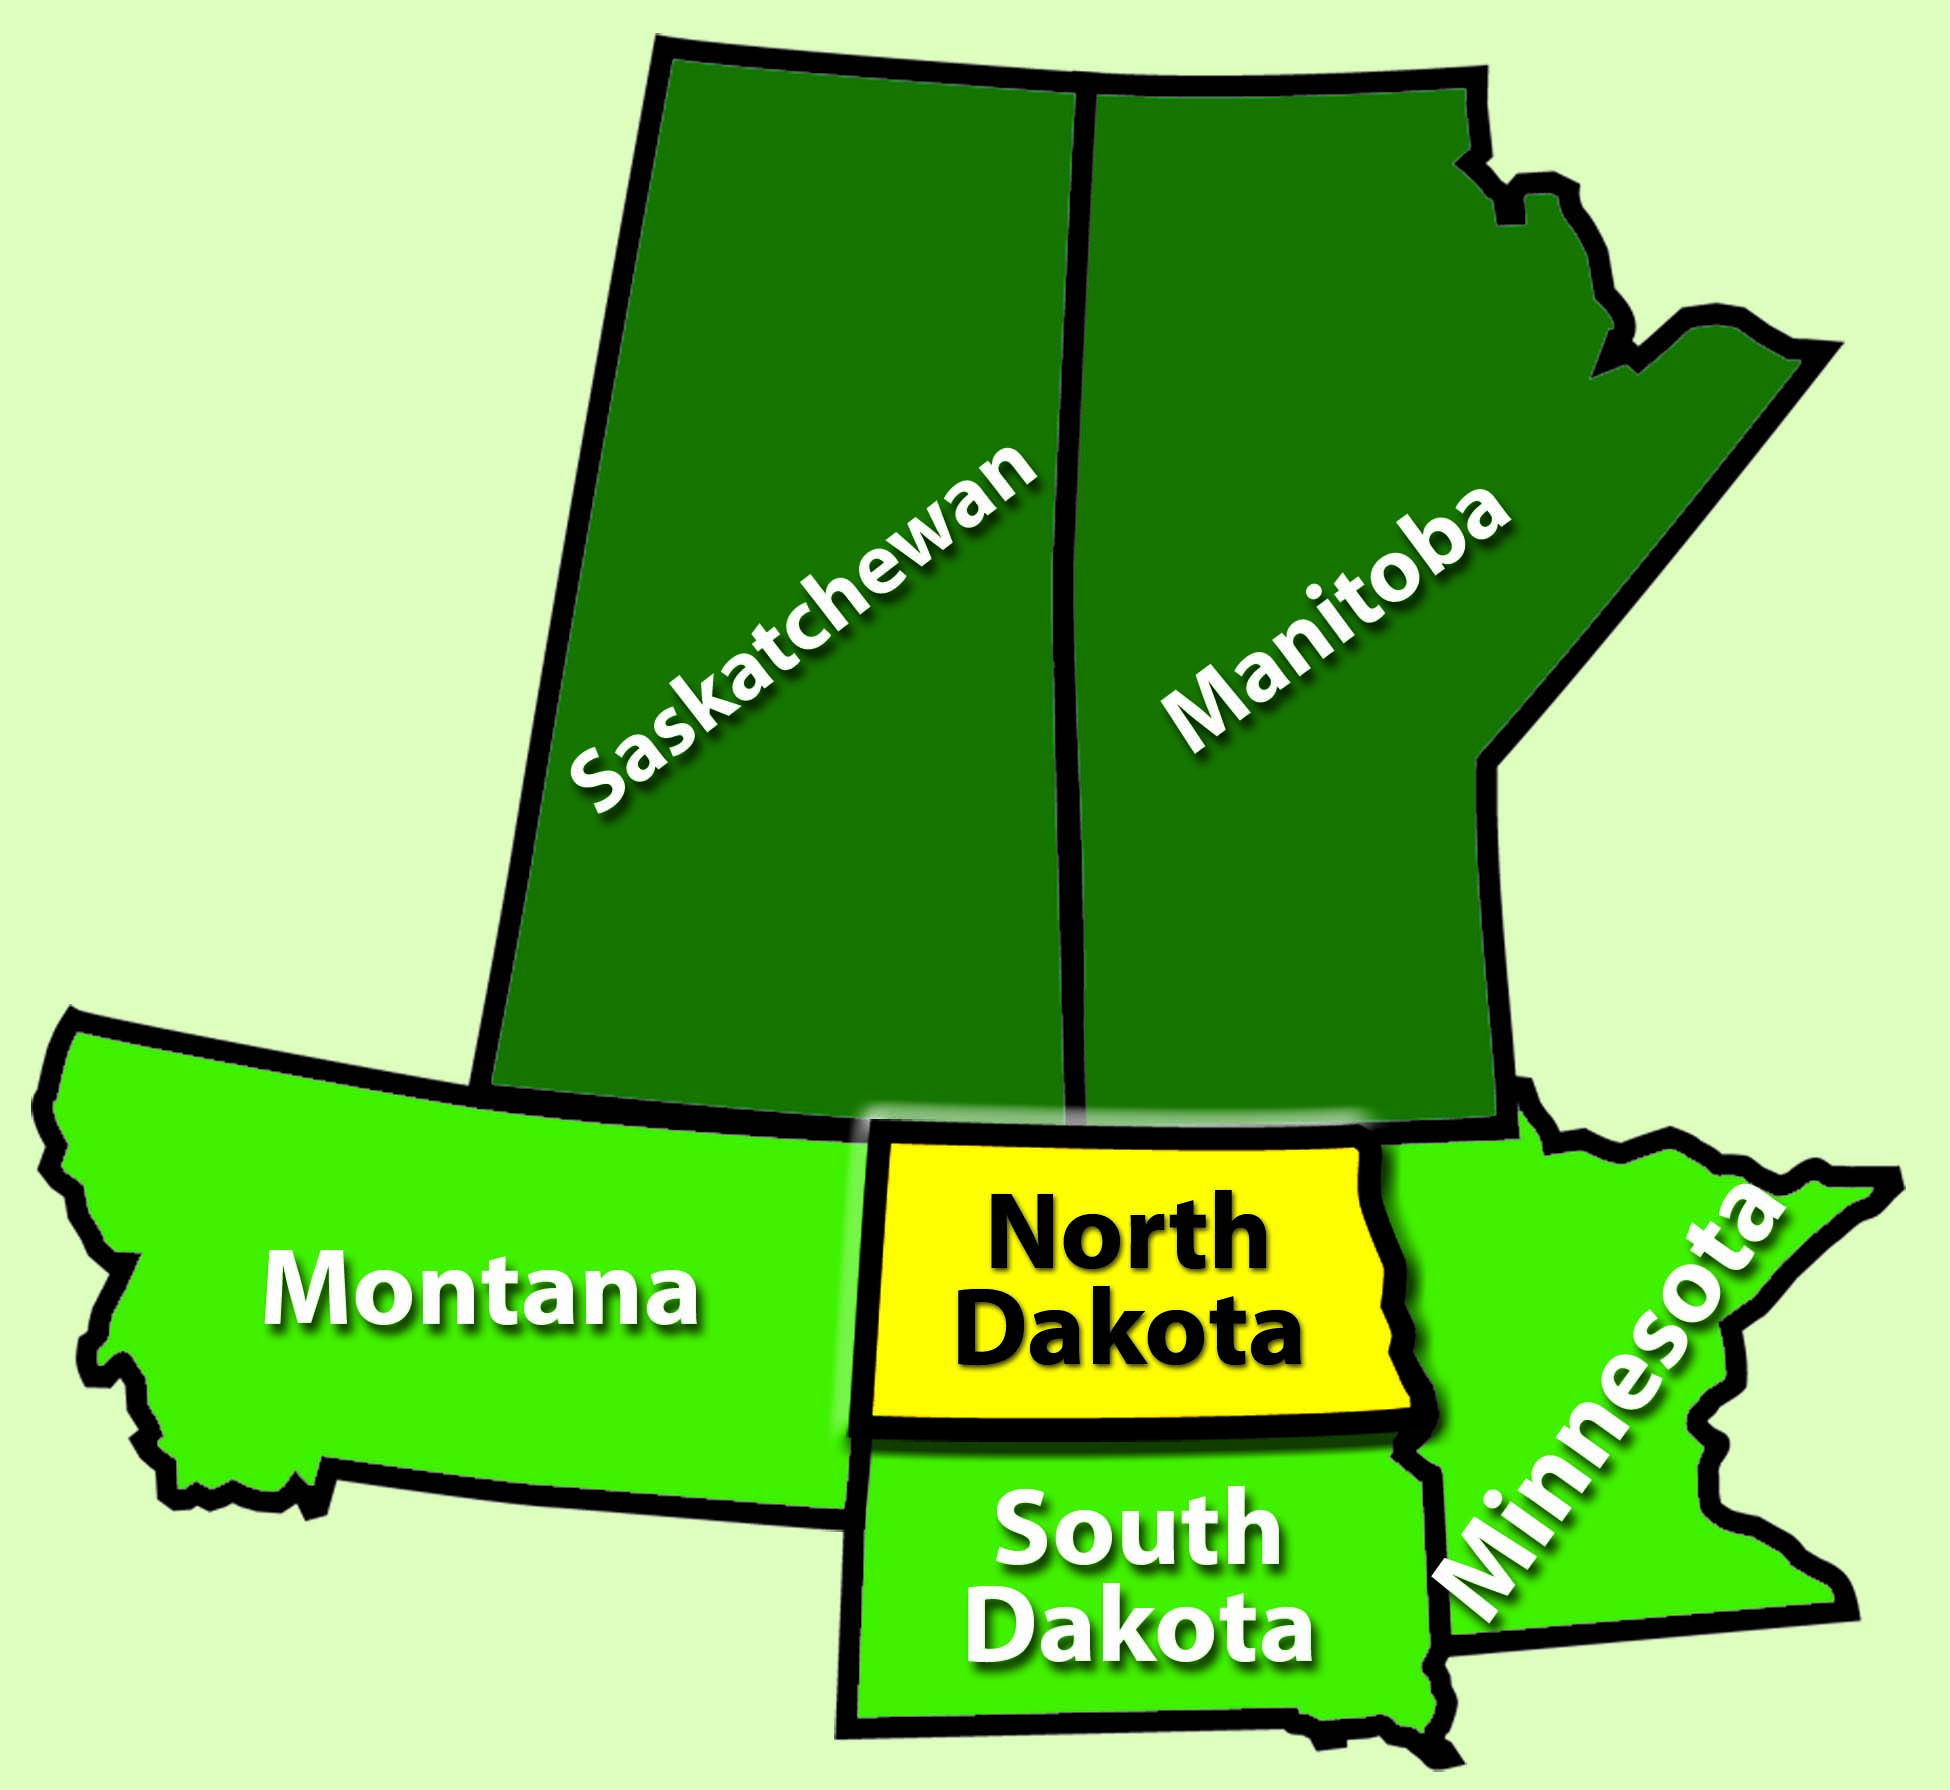 States bordering North Dakota